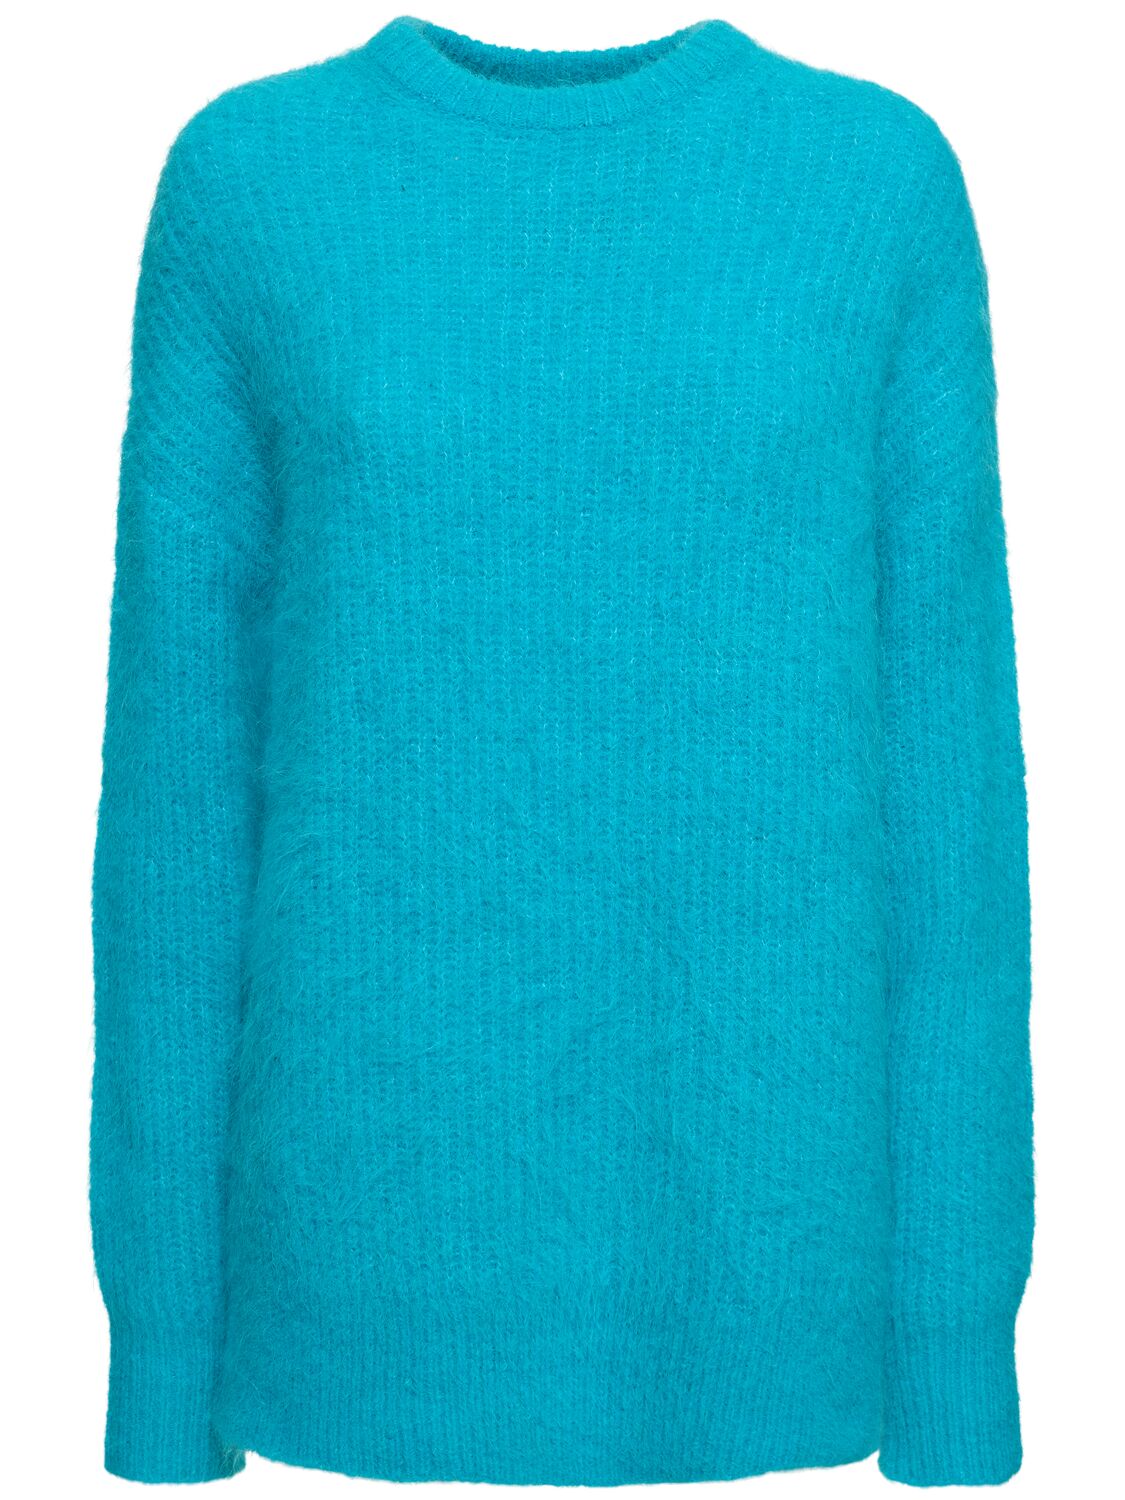 Sephia Oversized Alpaca Blend Sweater